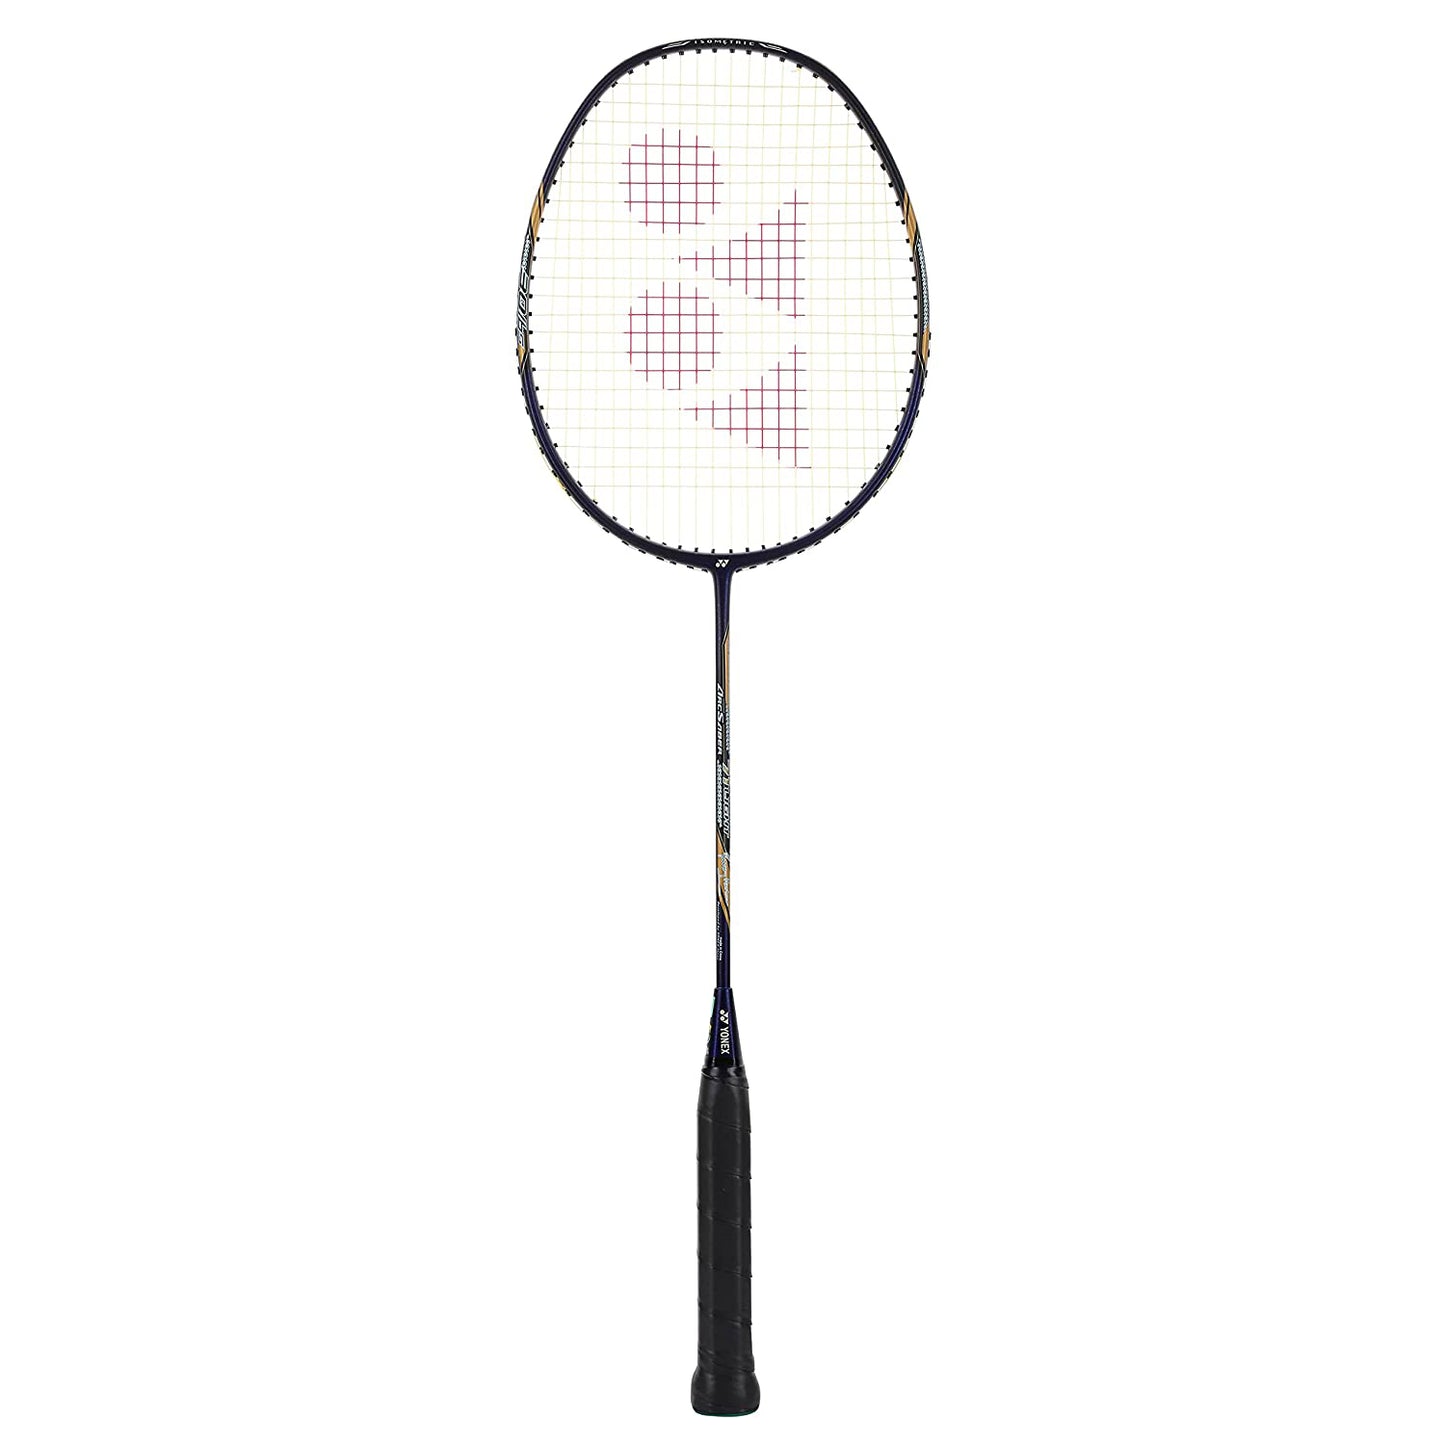 Yonex Arcsaber 71 Light Strung Badminton Racquet, G5 - Navy Blue - Best Price online Prokicksports.com